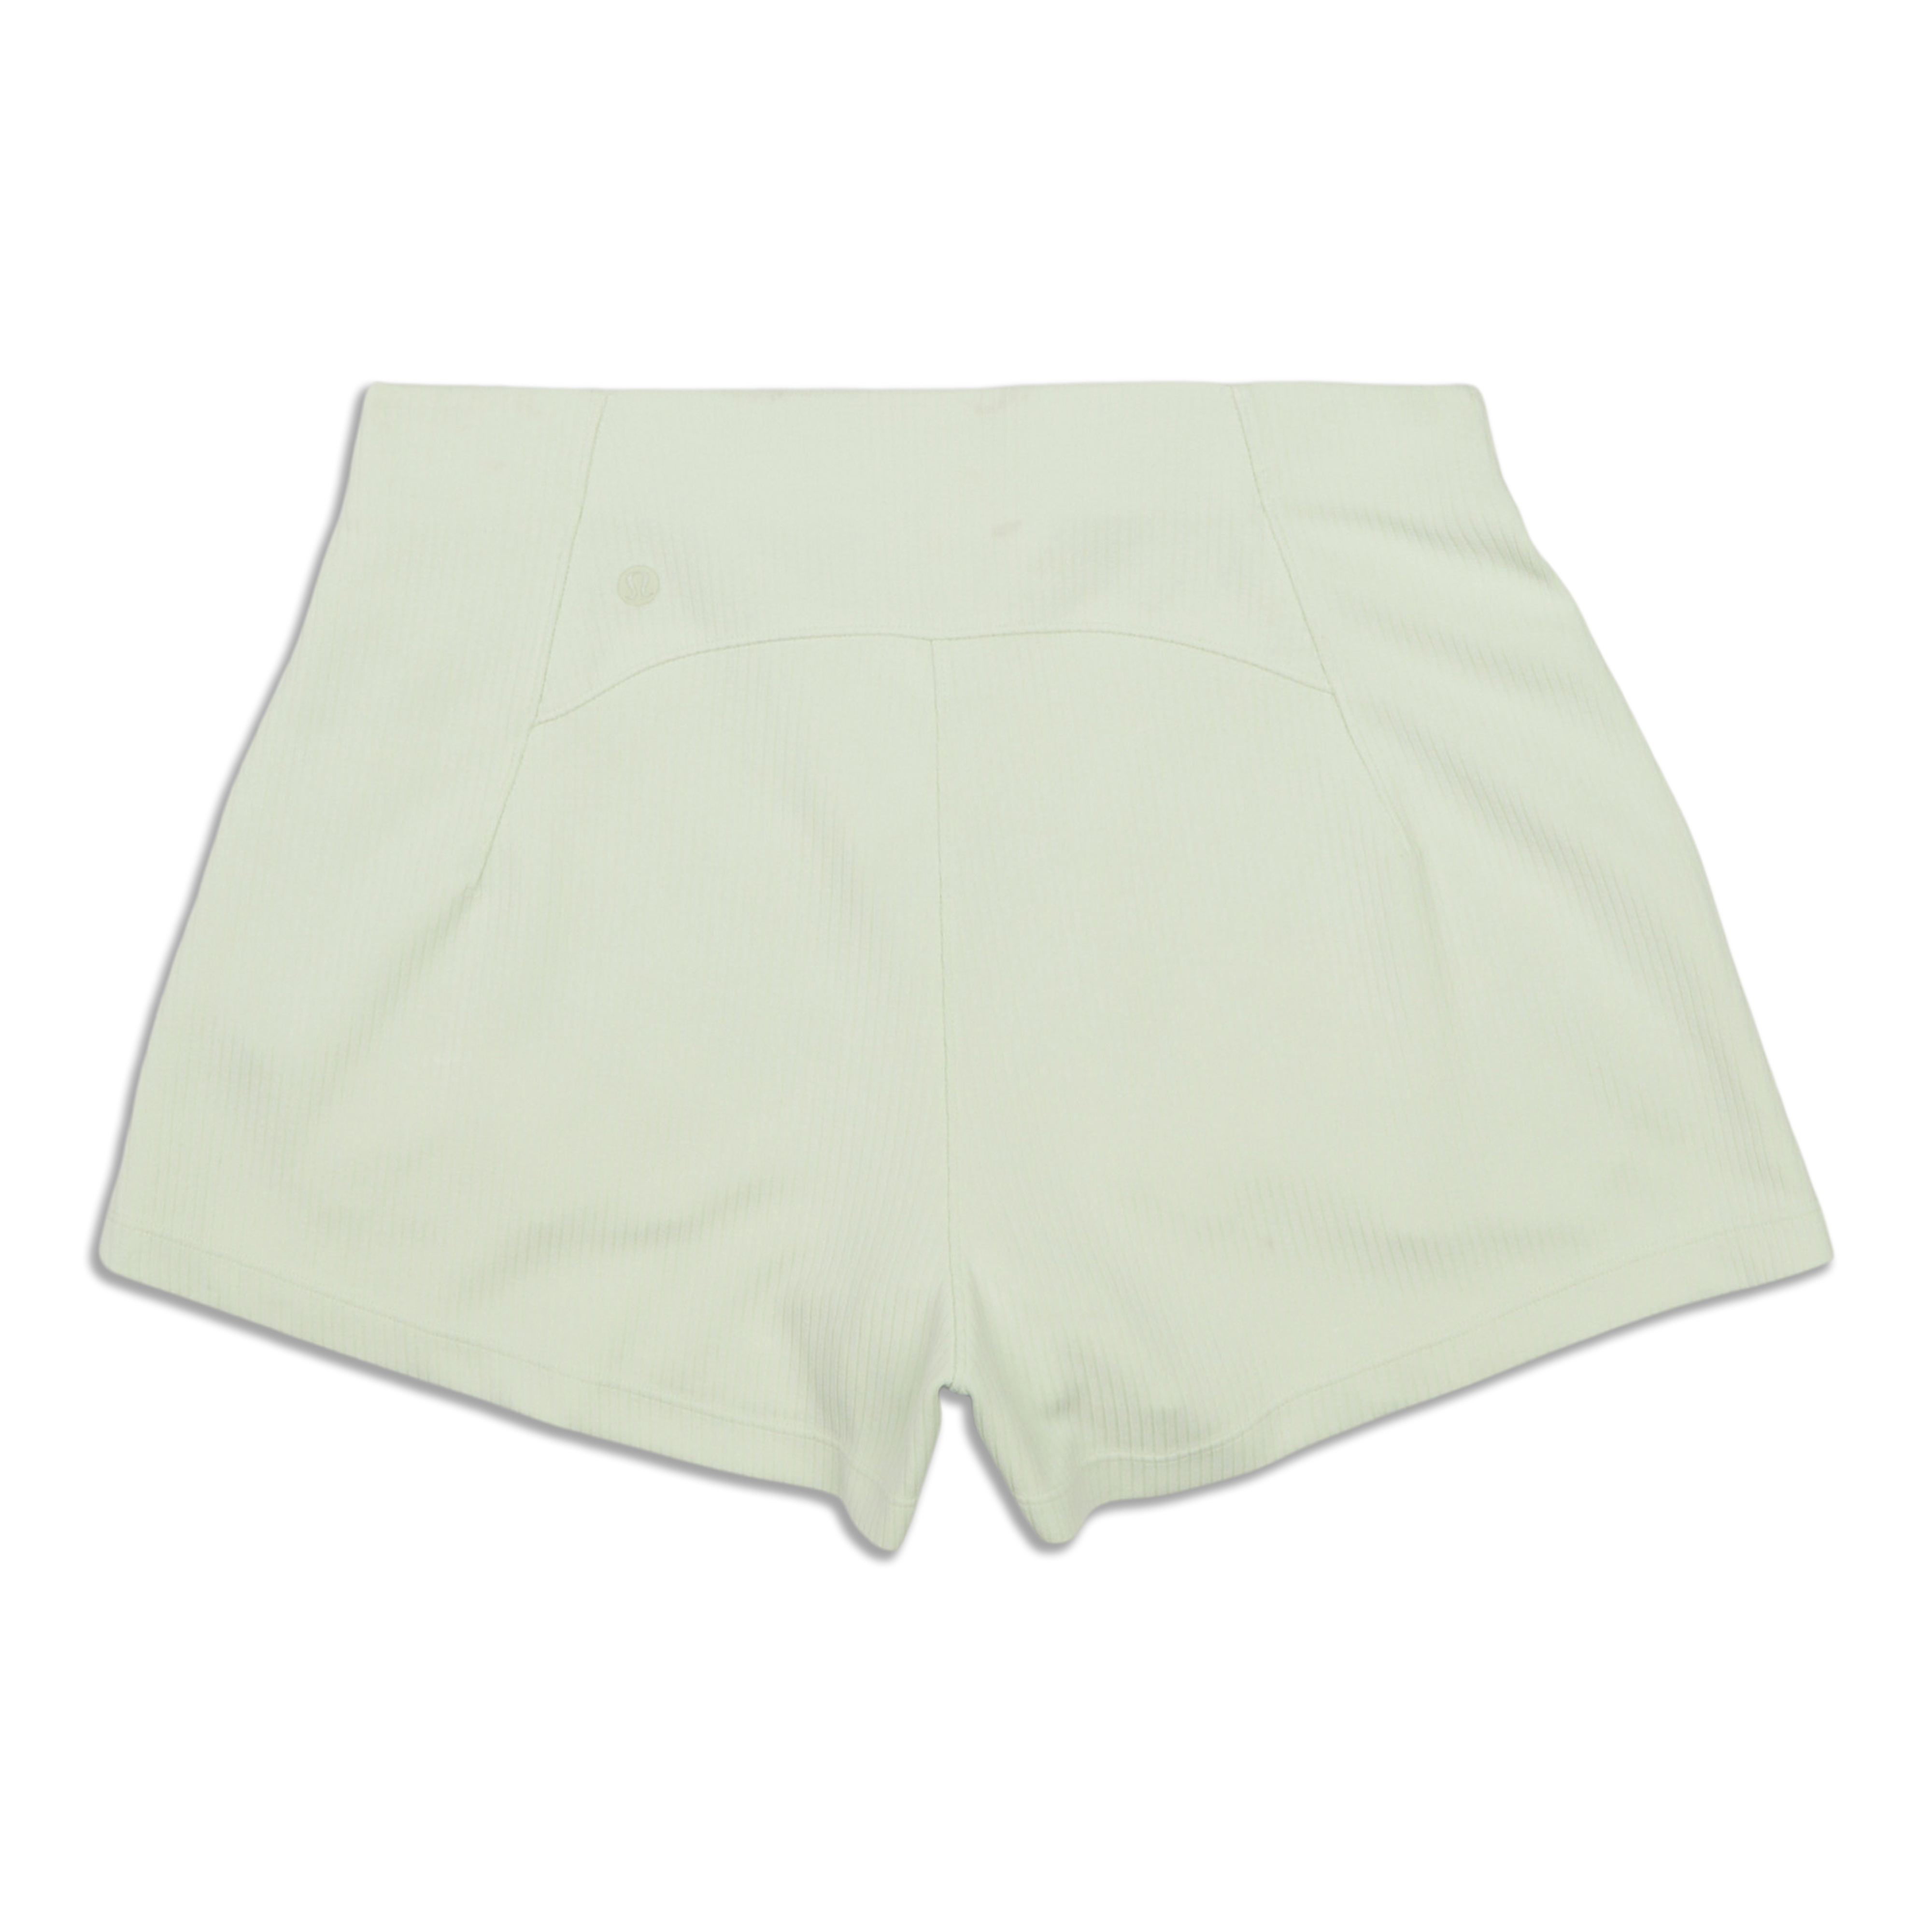 Bury me in these softstreme shorts 🤤 : r/lululemon